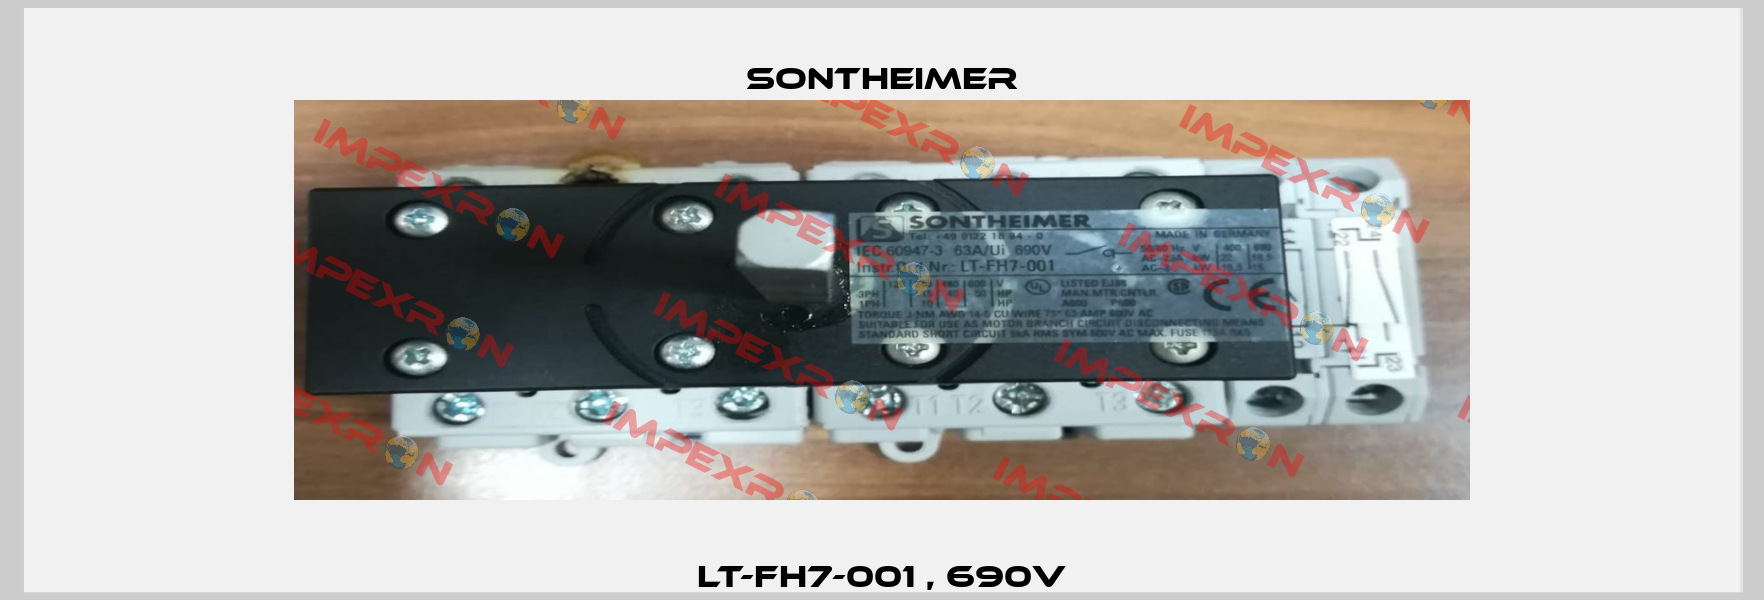 LT-FH7-001 , 690V Sontheimer